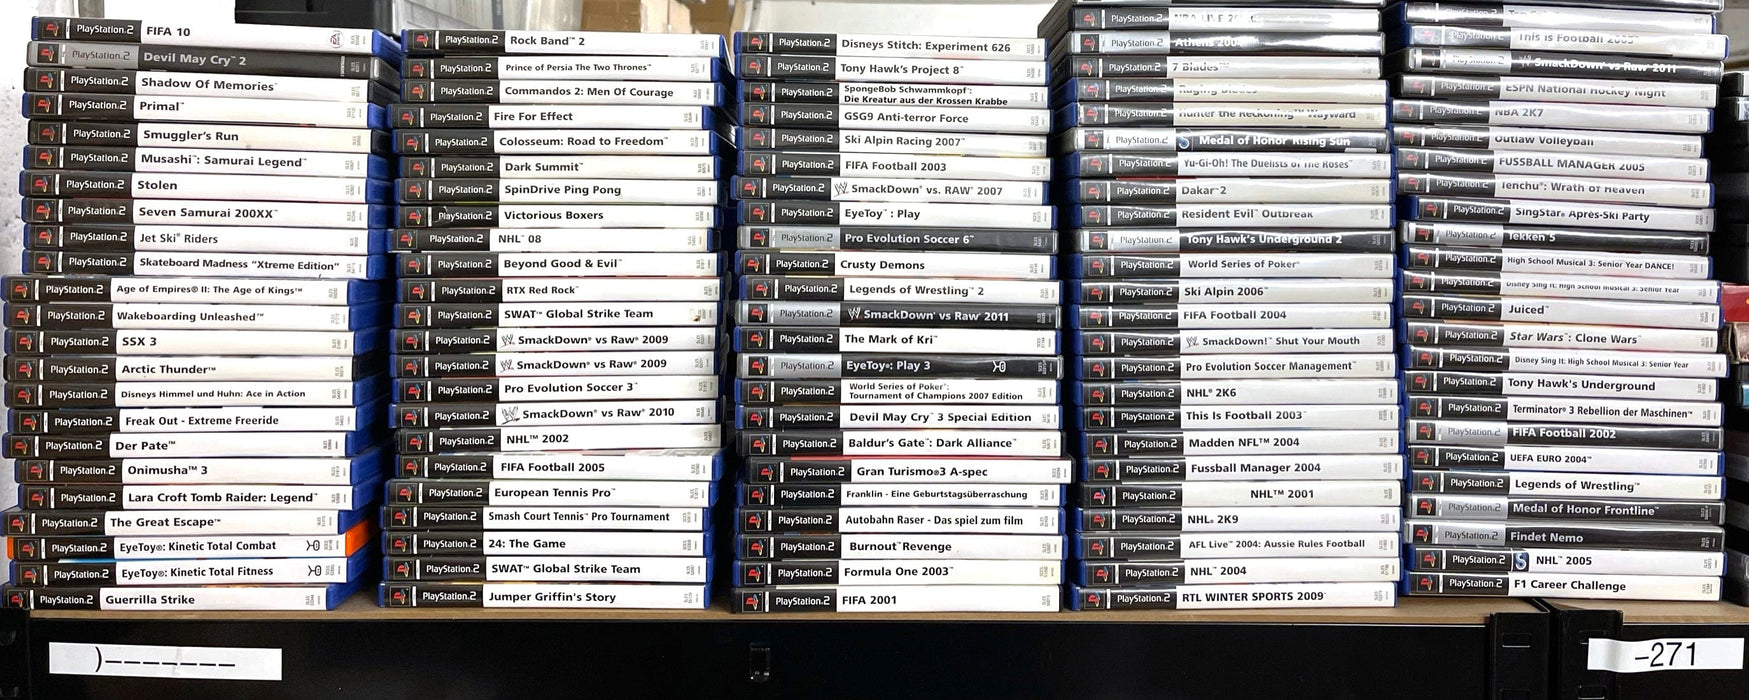 Glaciergames PlayStation 2 Game Gran Turismo 3: A-spec [Platinum] PlayStation 2 (Nr.17)